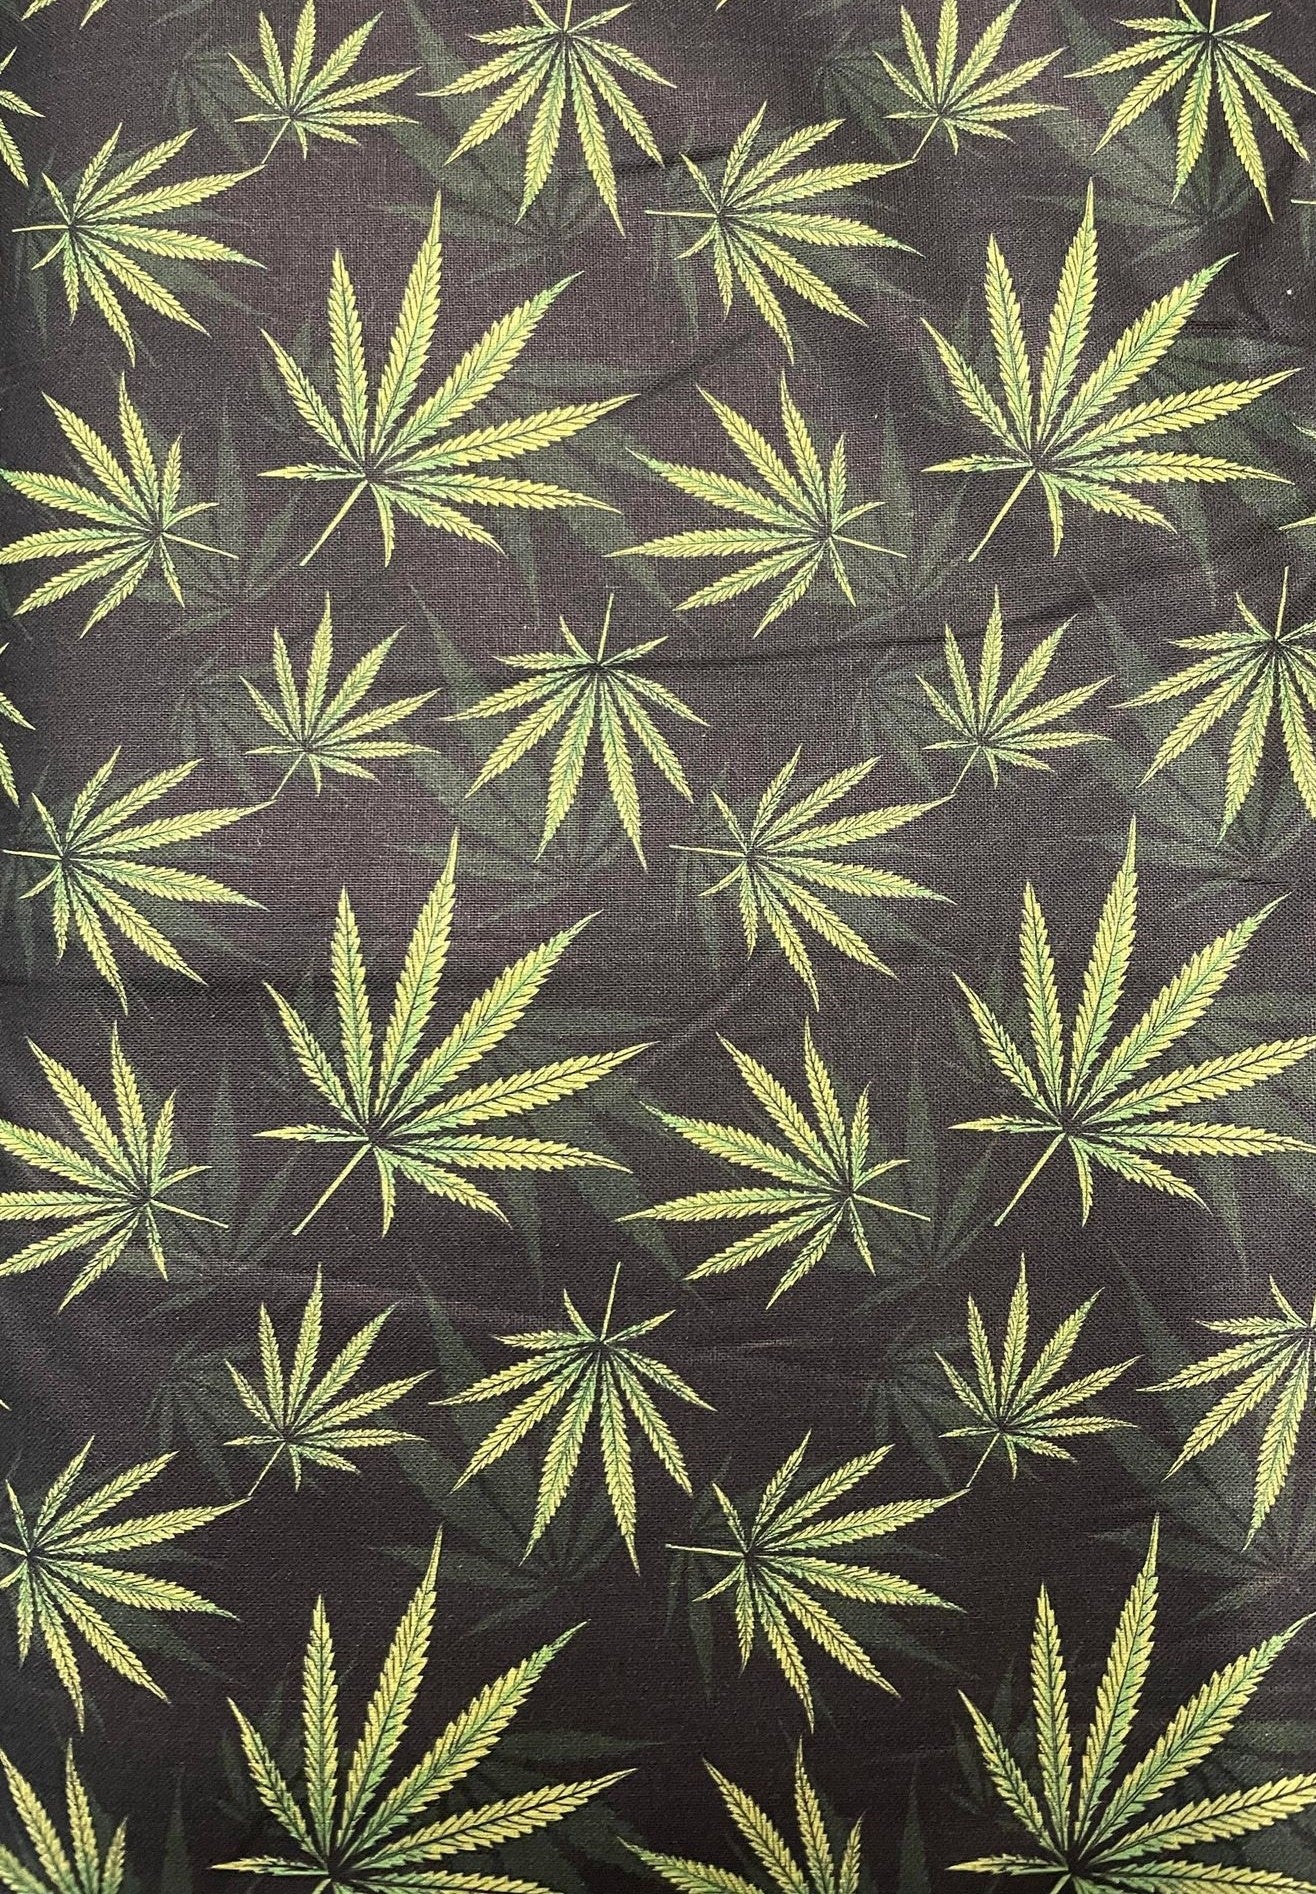 Tissu 100% coton imprimé feuilles de cannabis